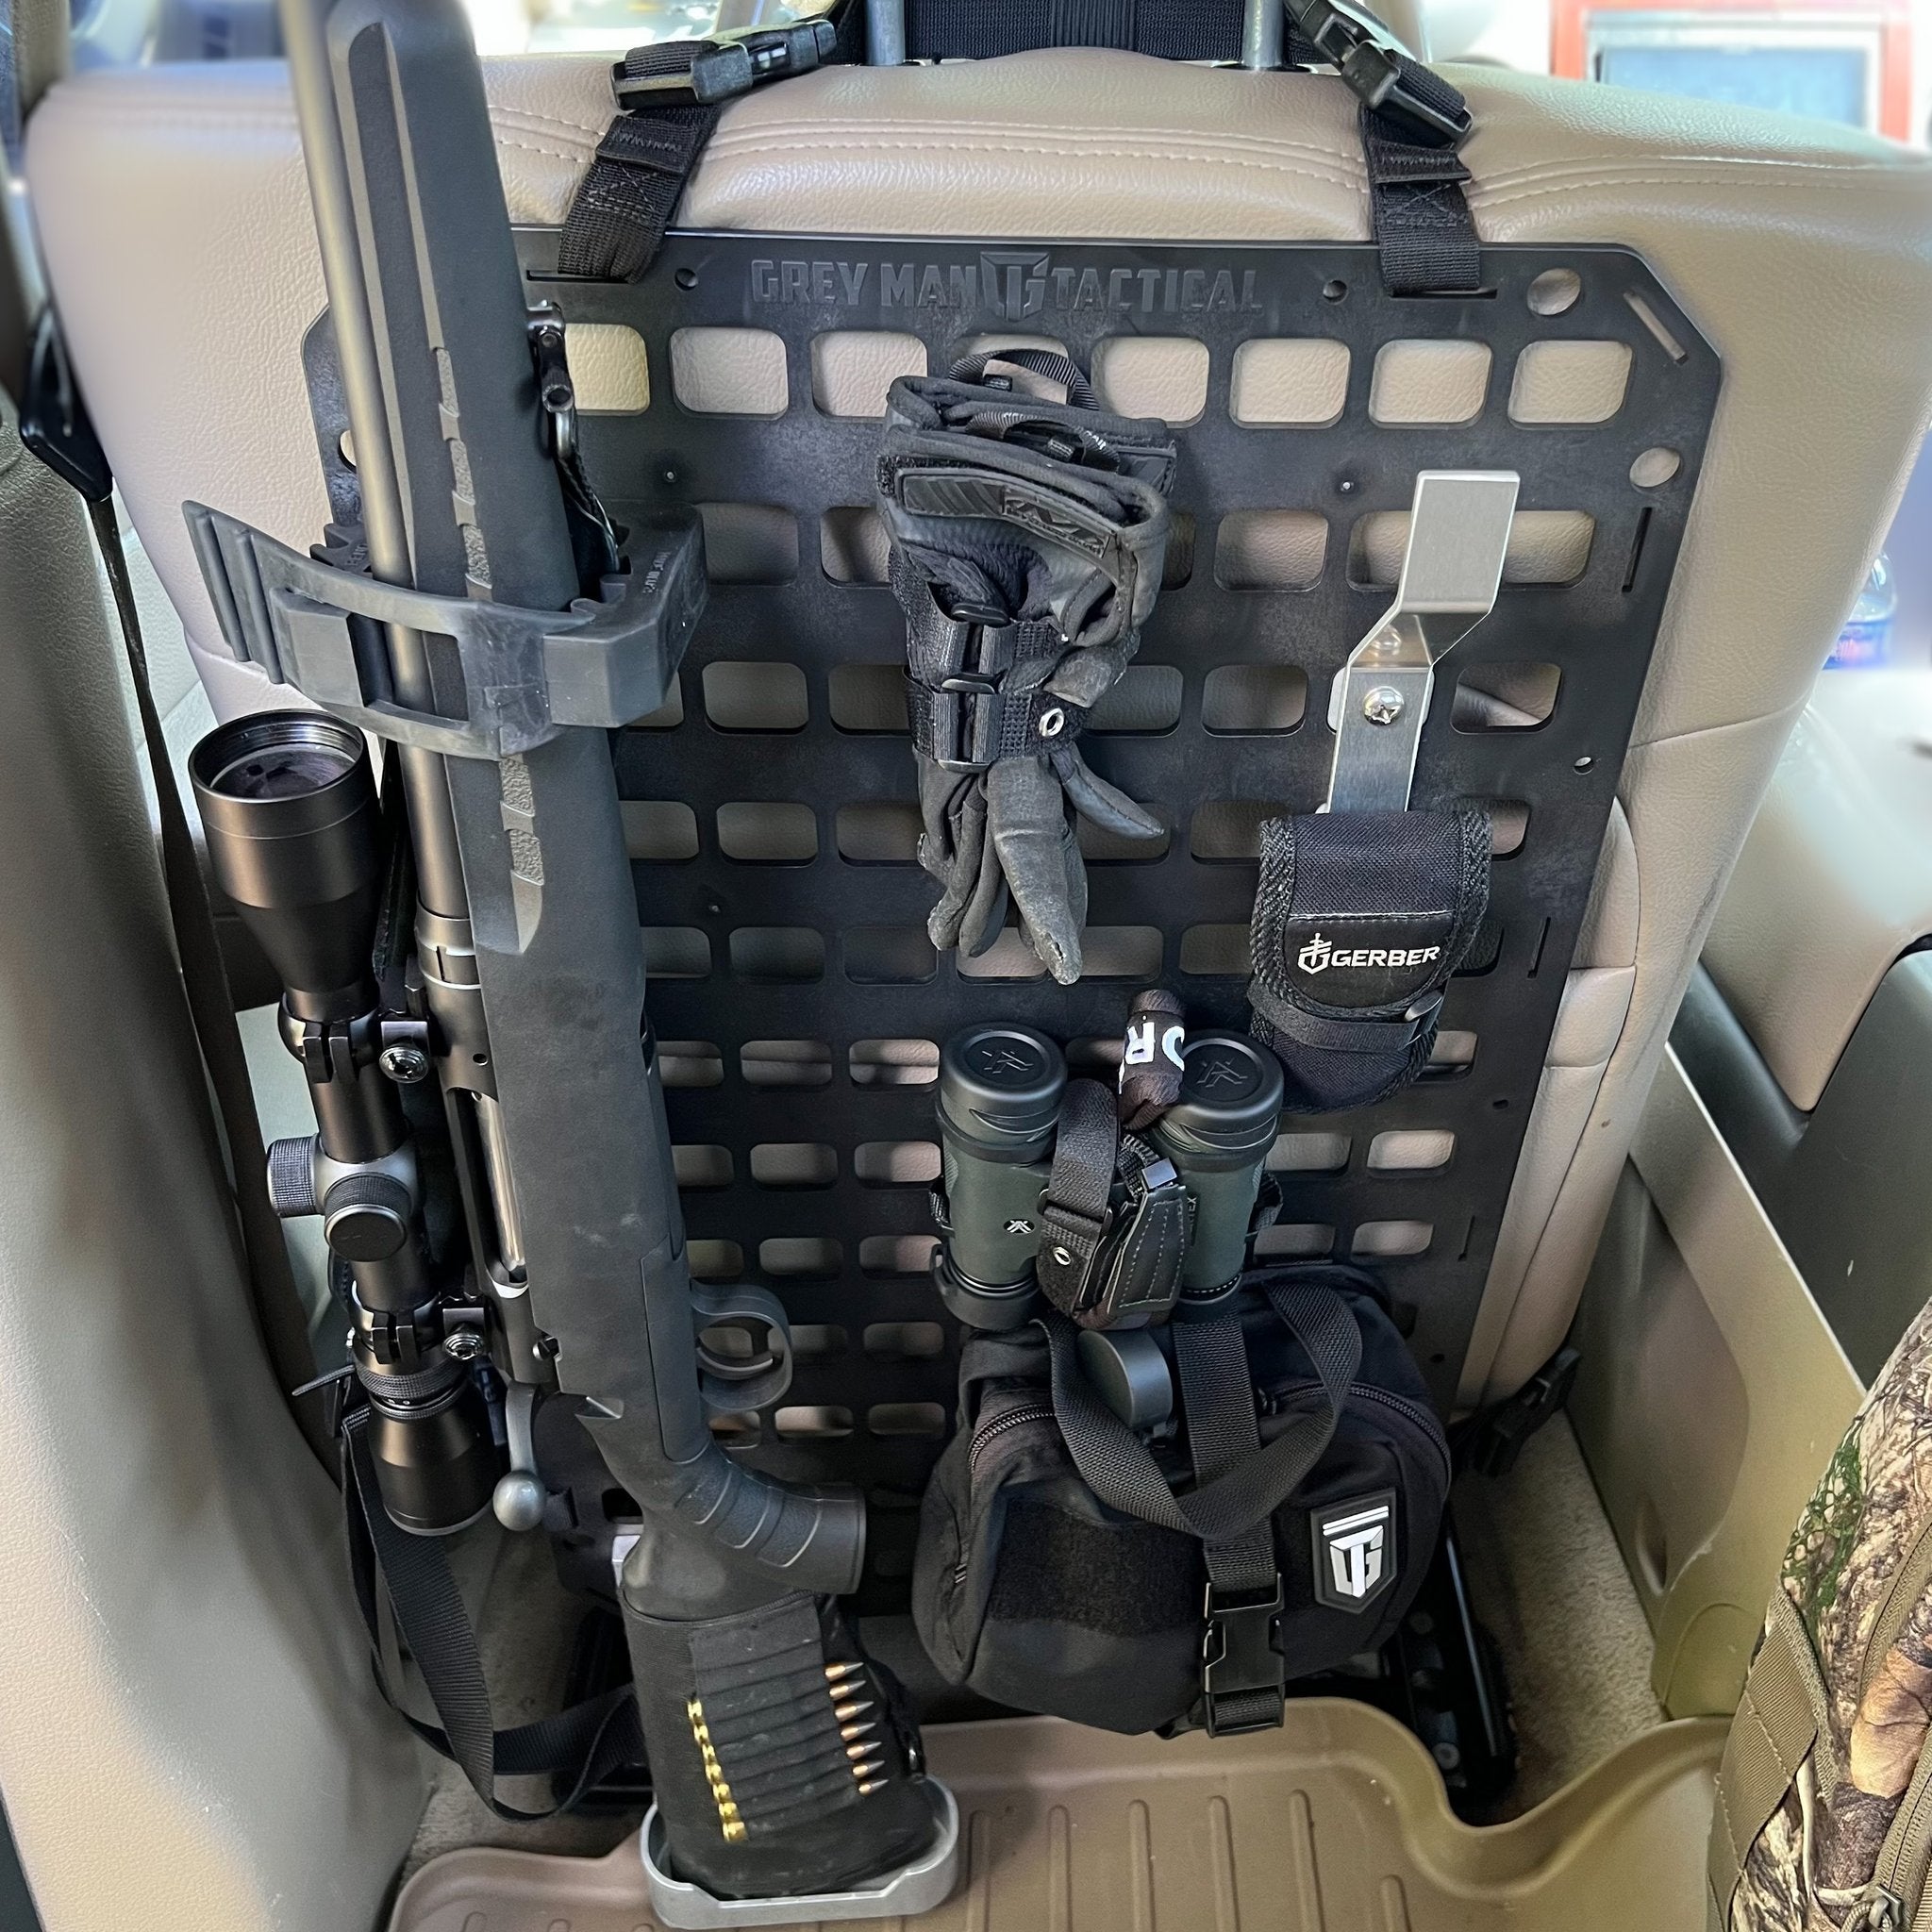 Grey Man Tactical's New Vehicle Hunting Gun Rack RMP